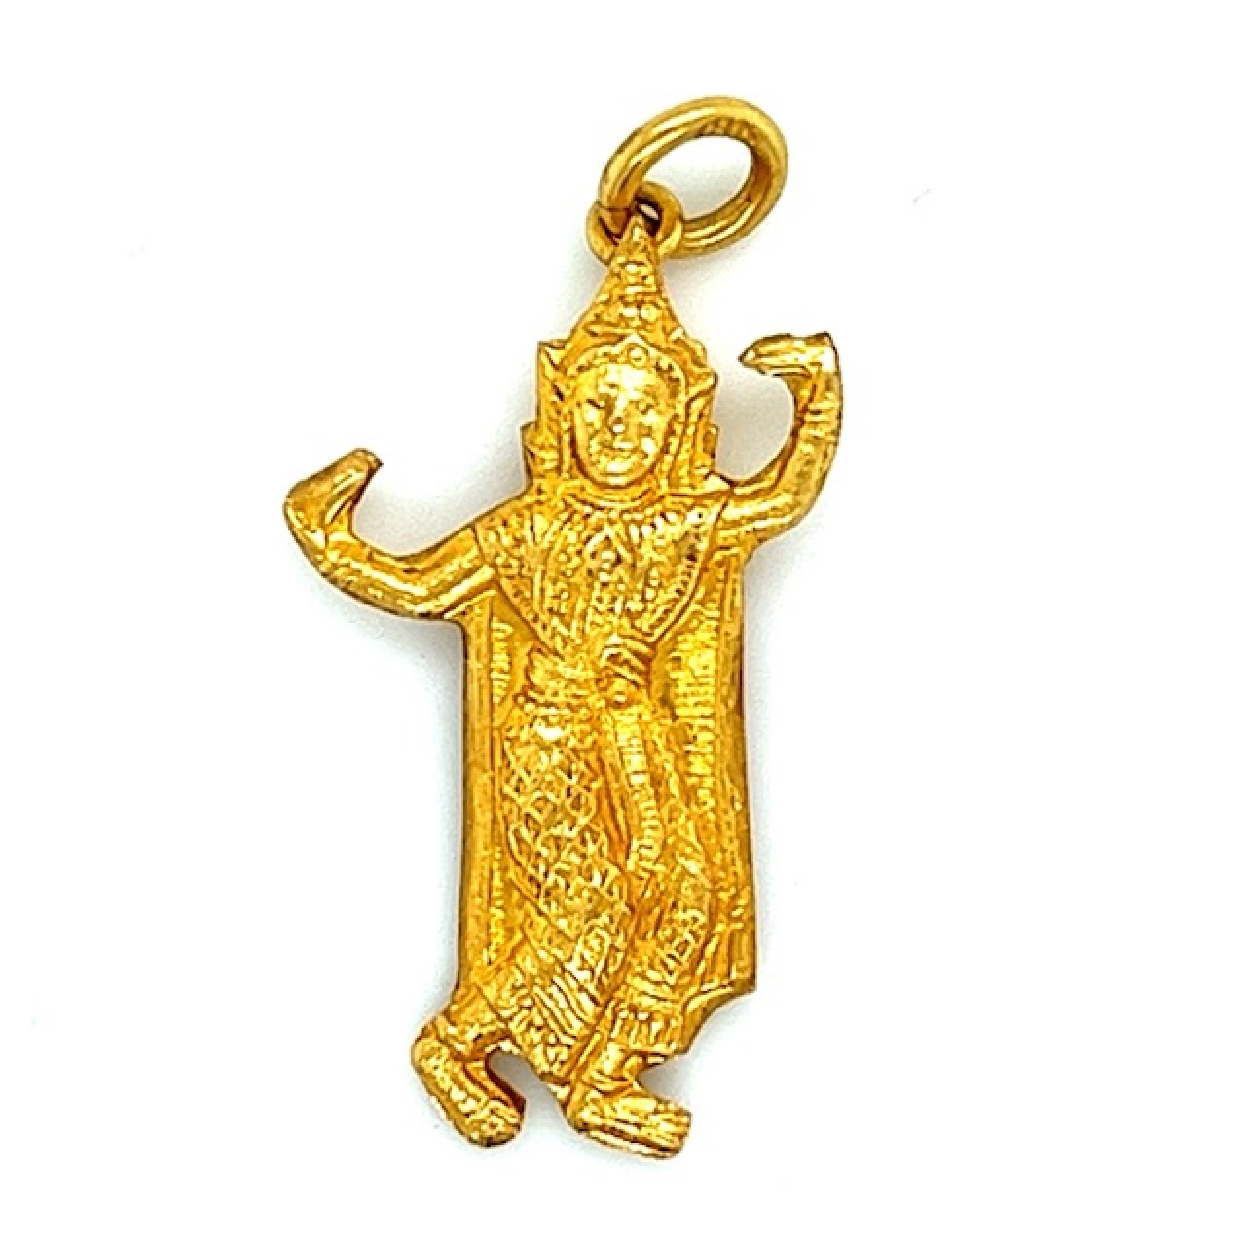 22K Yellow Gold Hindu God Pendant or Charm